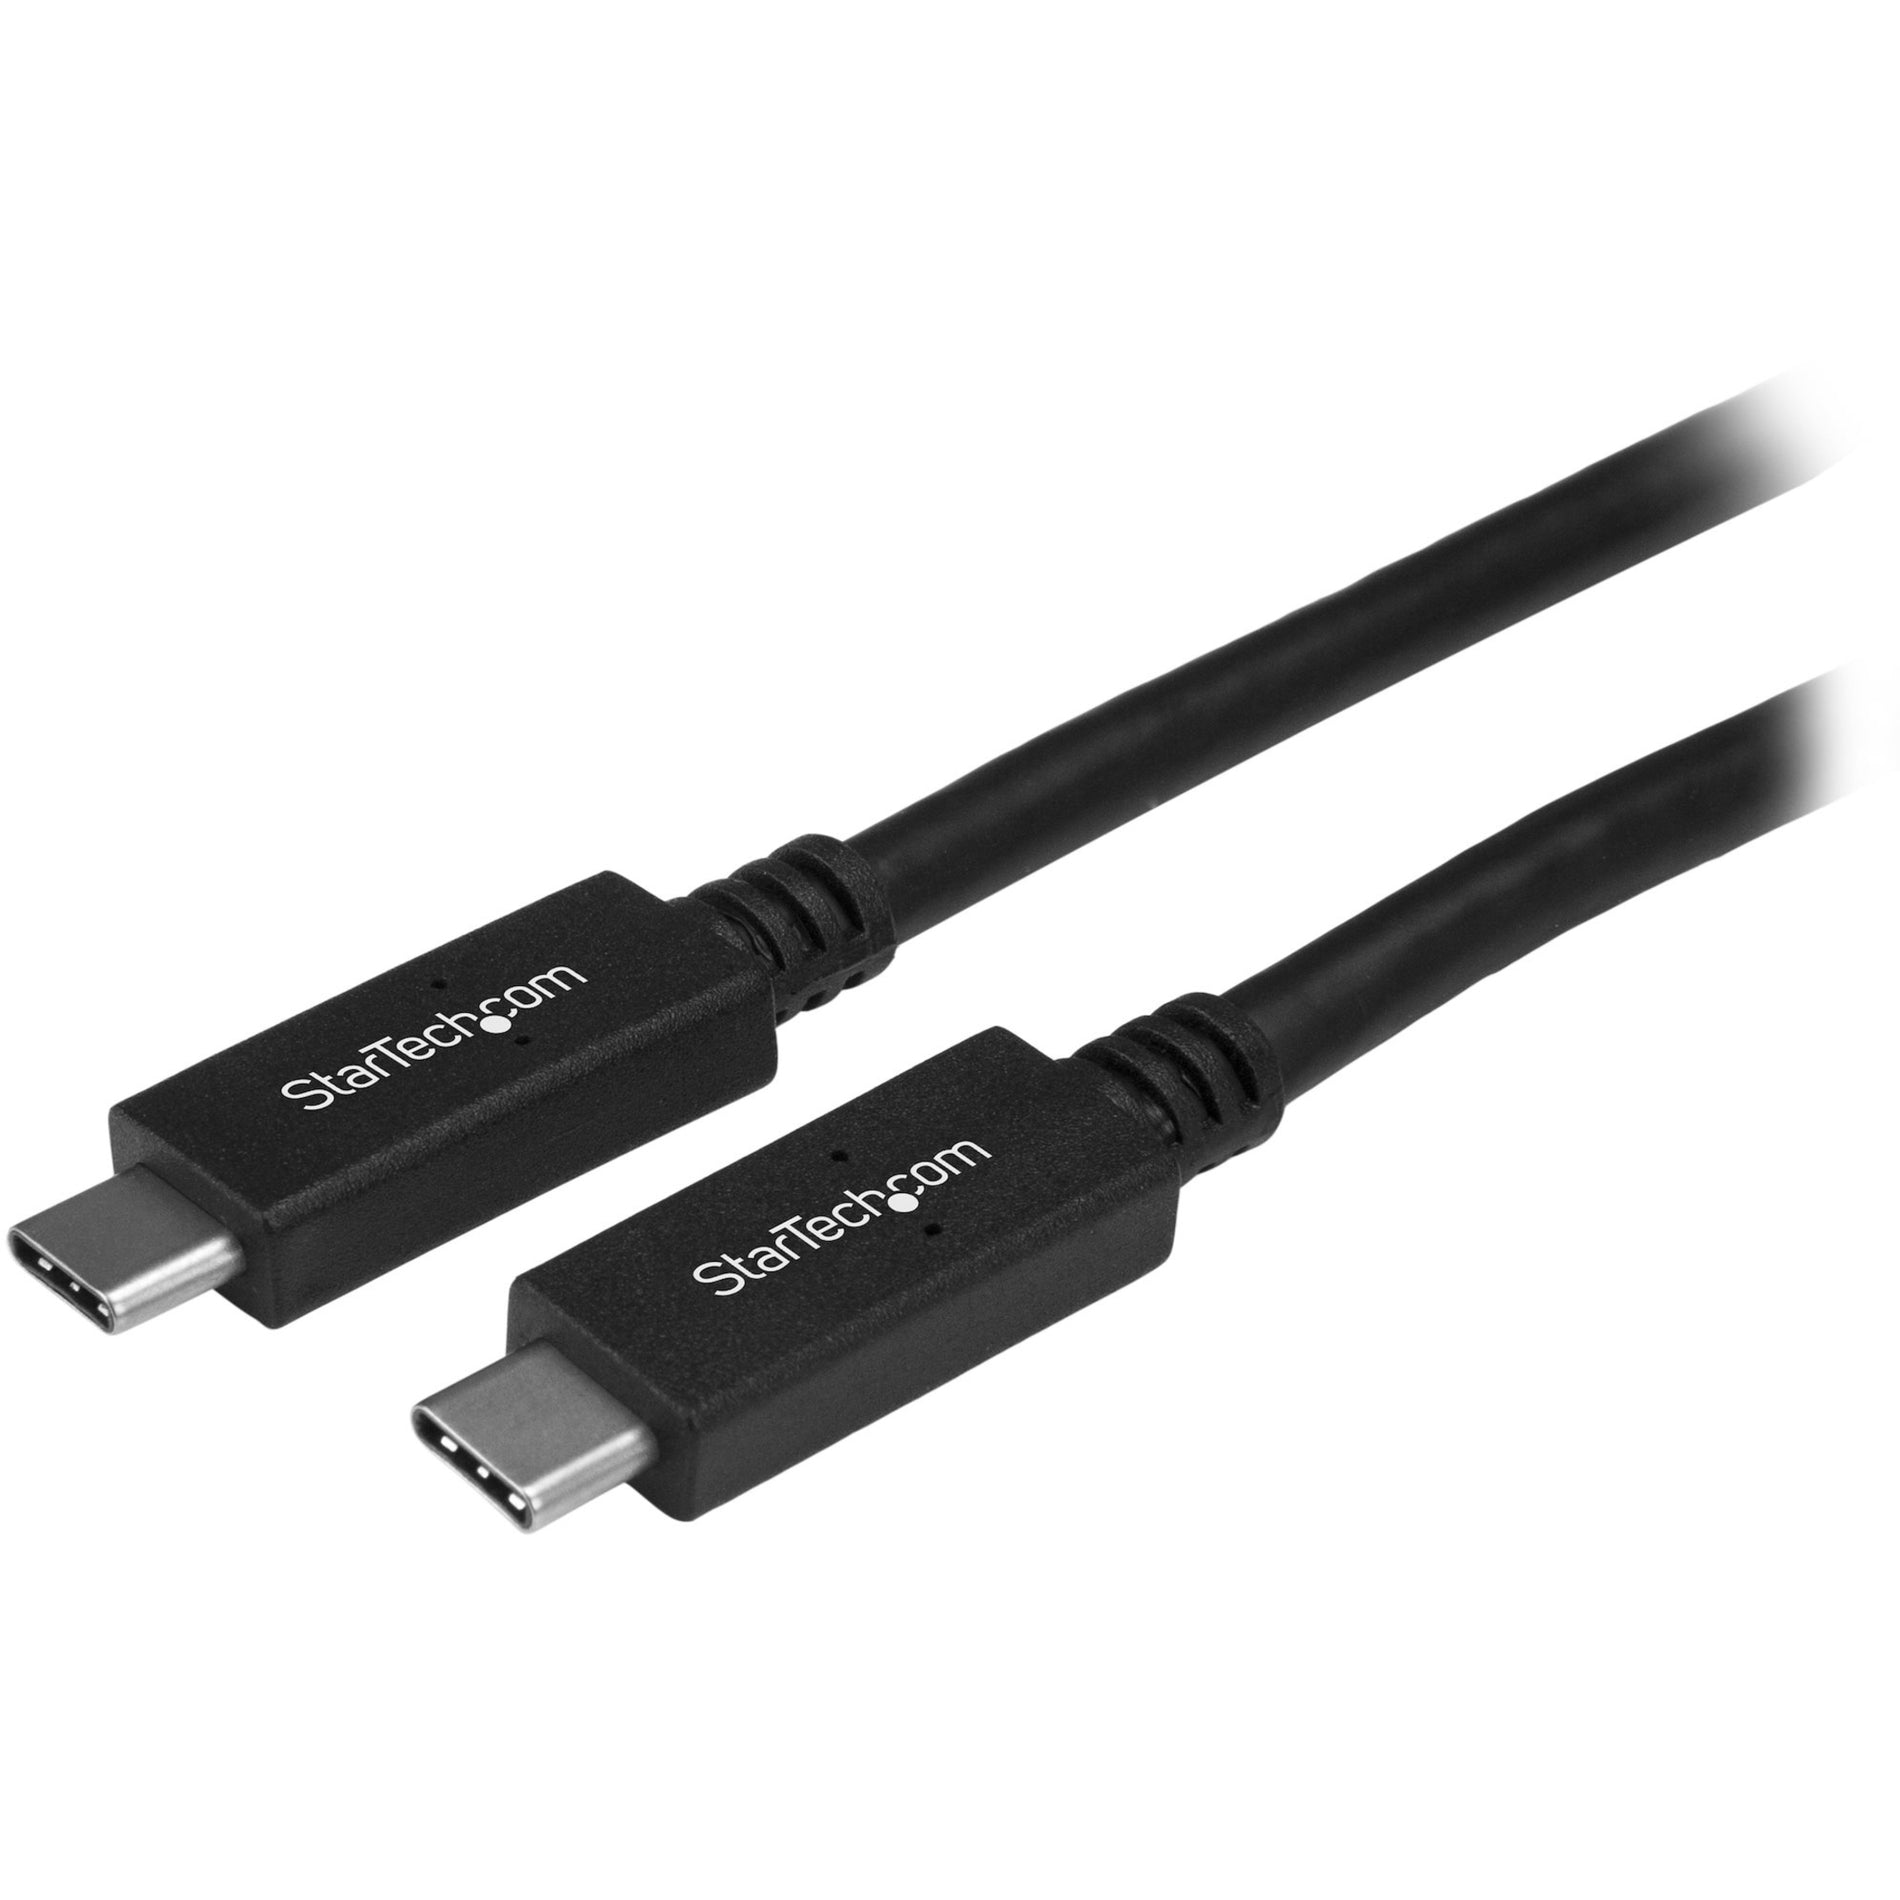 StarTech.com: スタートレック・ドットコム  USB31CC1M: USB31CC1M  1m: 1メートル  (3ft): (3フィート)  USB-C Cable: USB-Cケーブル  USB Type-C: USB Type-C  USB 3.1 Gen 2: USB 3.1 第2世代 10Gbps Cable: 10Gbps ケーブル